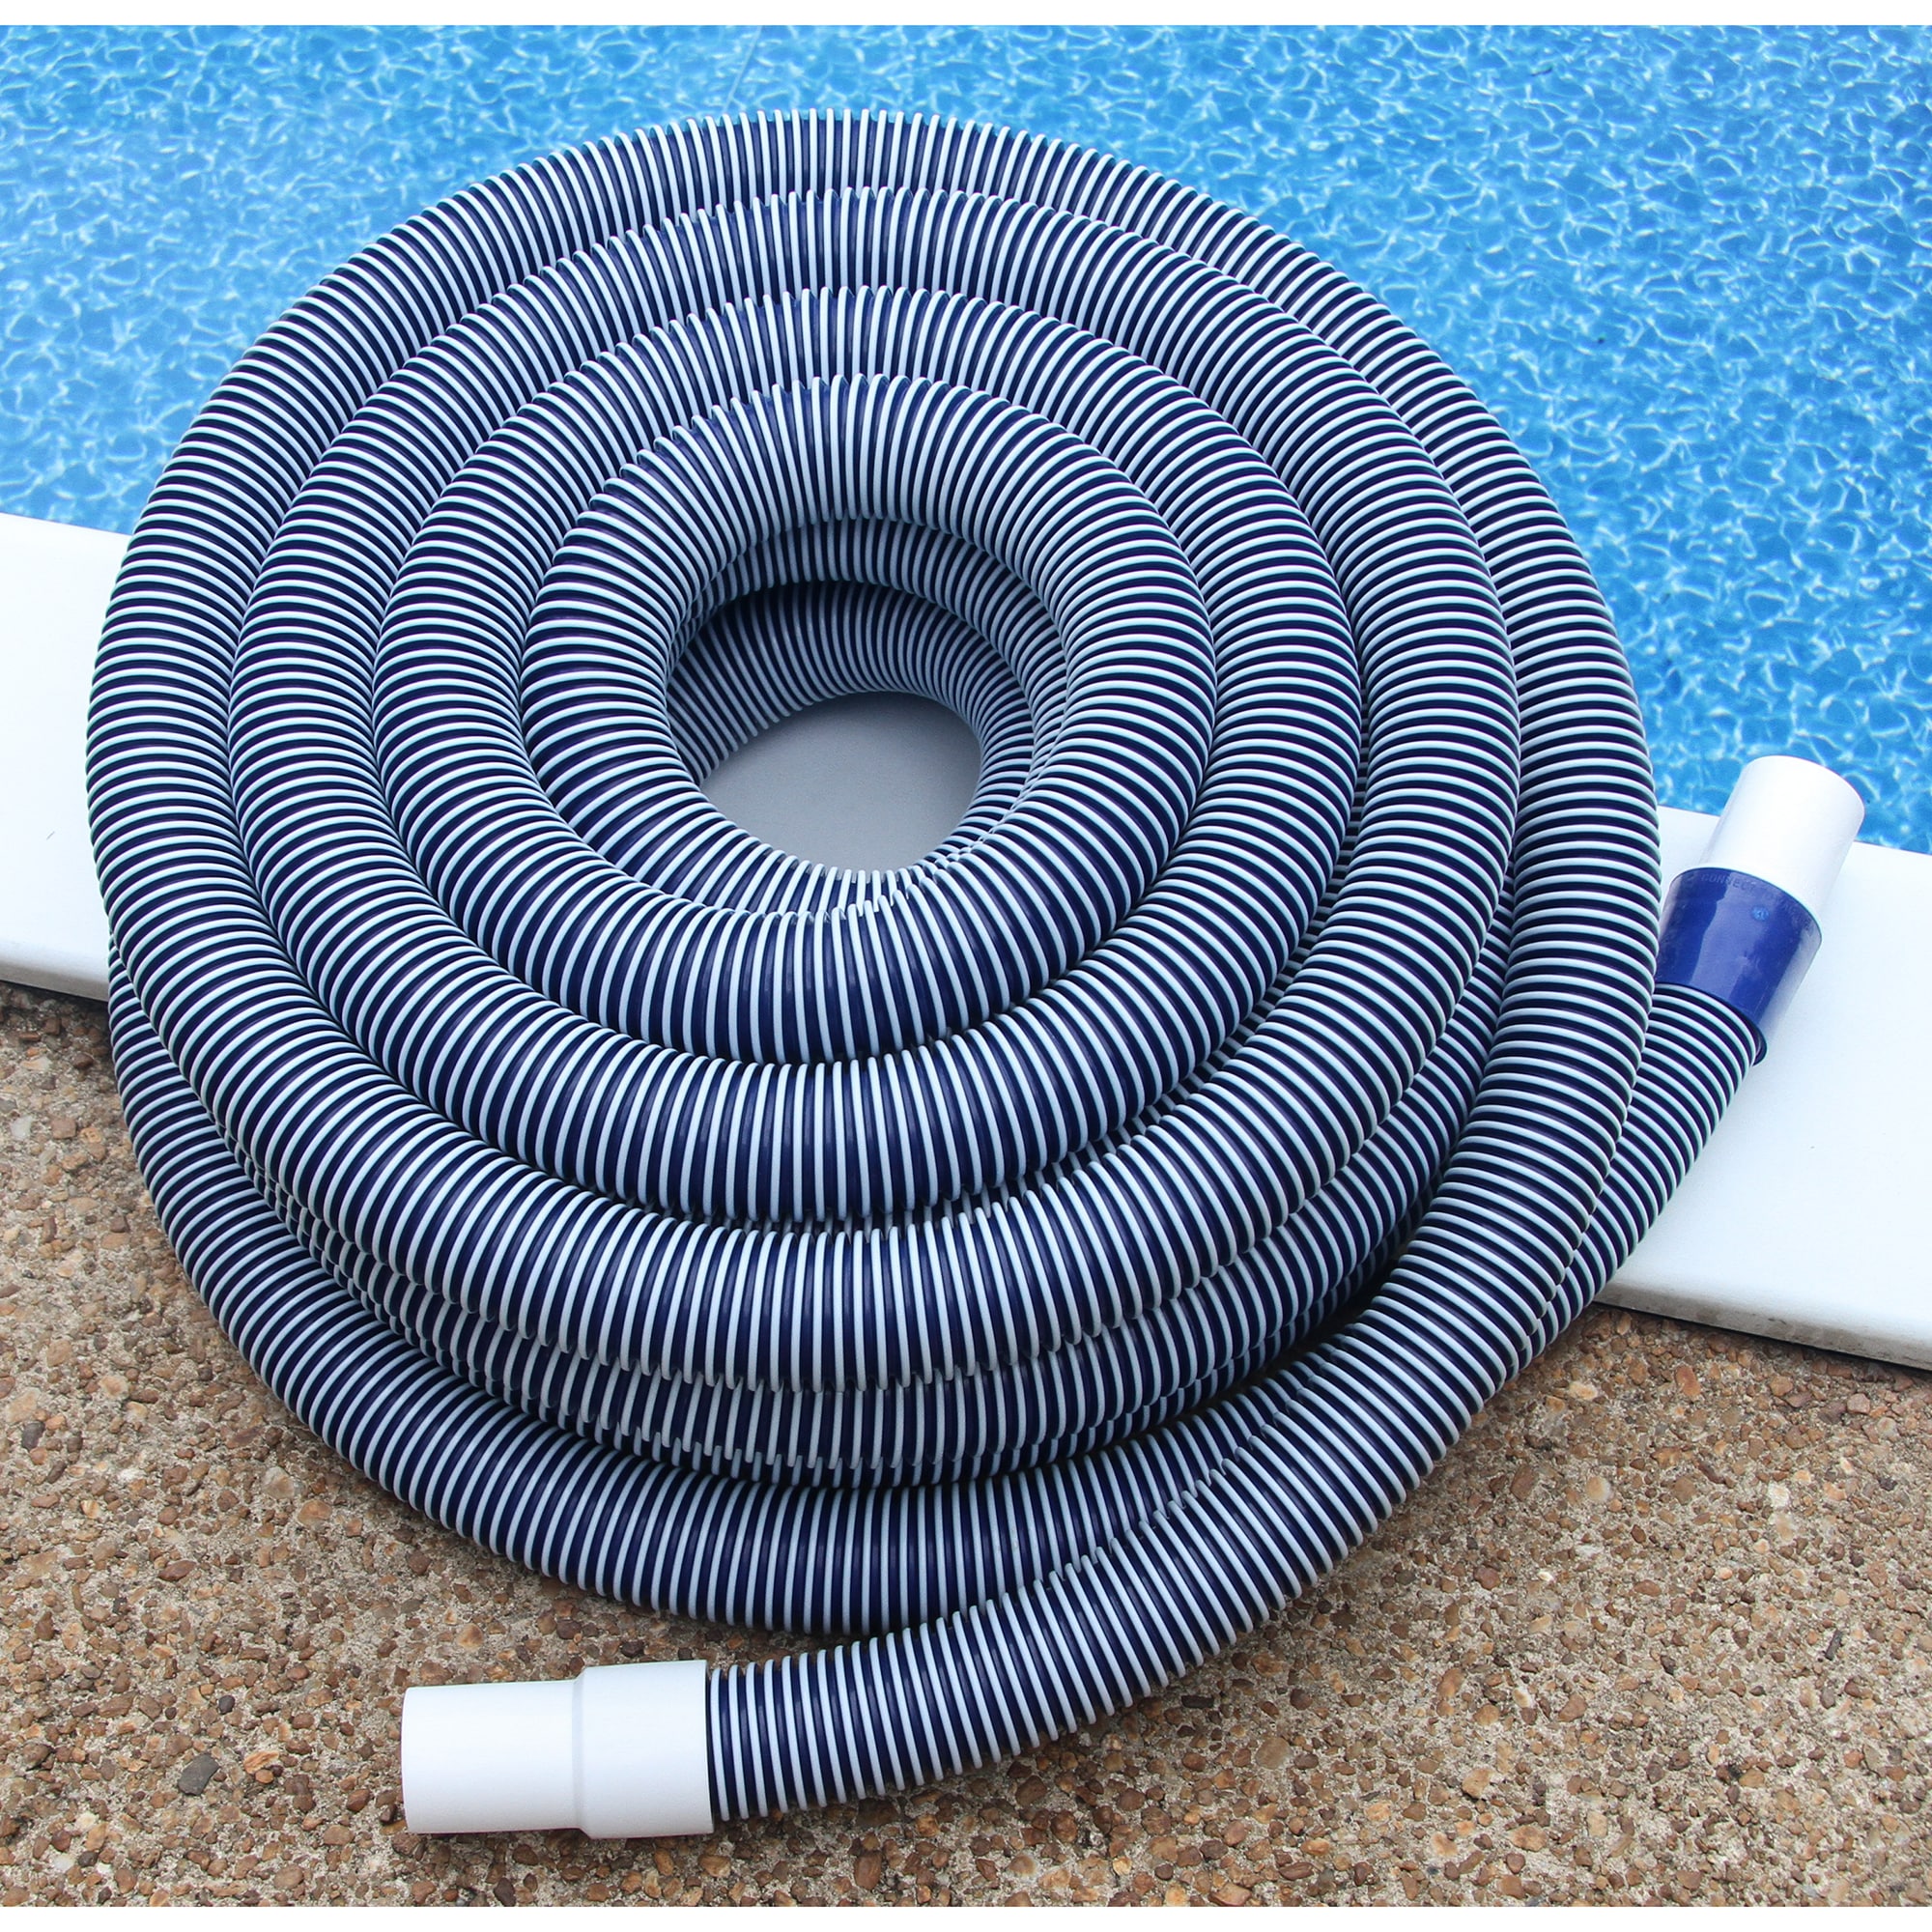 Swimming pool vacuum hose • Compare best prices now »